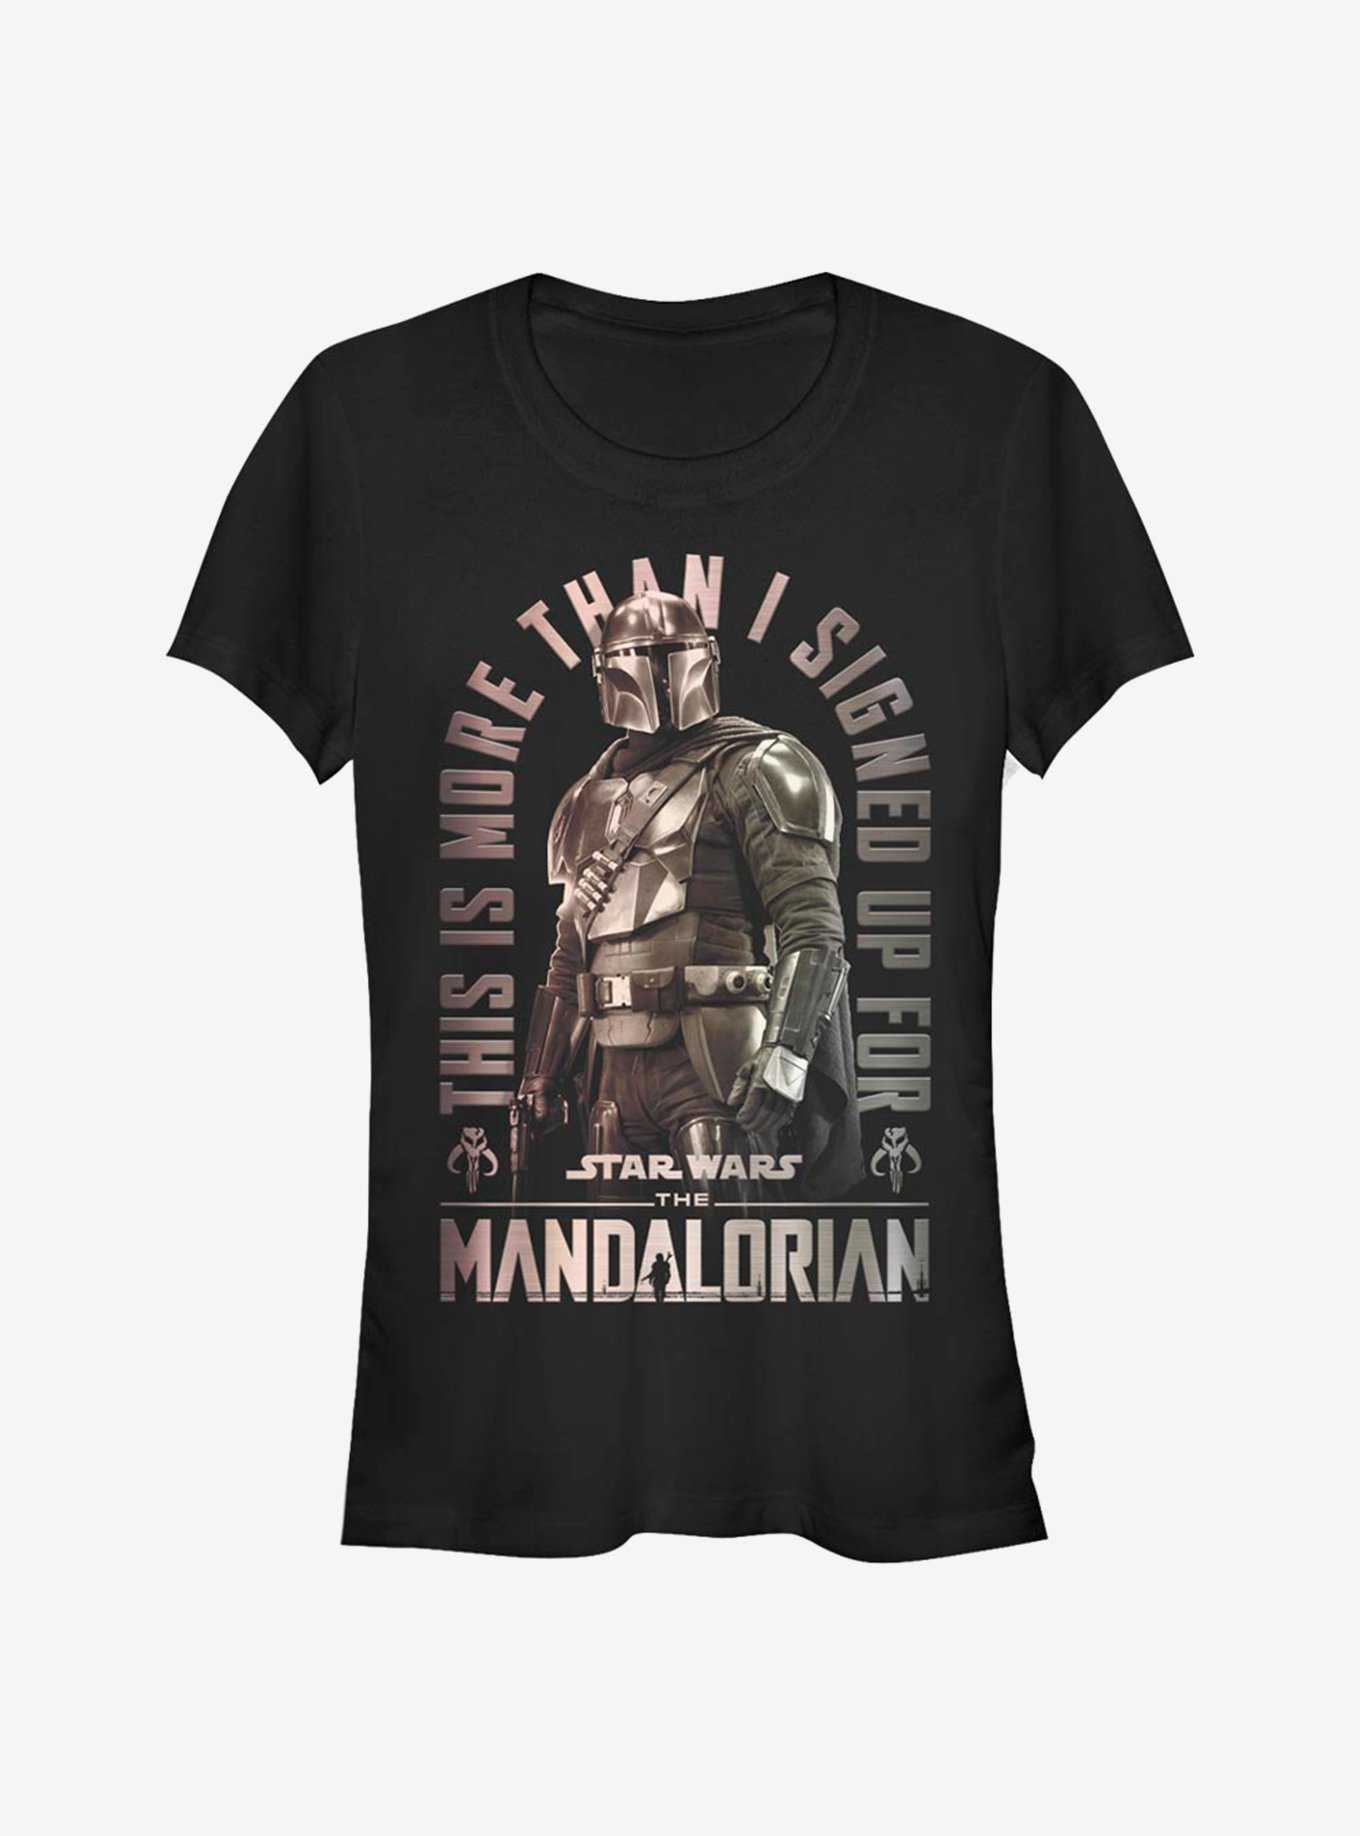 Star Wars The Mandalorian Signed Up Girls T-Shirt, , hi-res